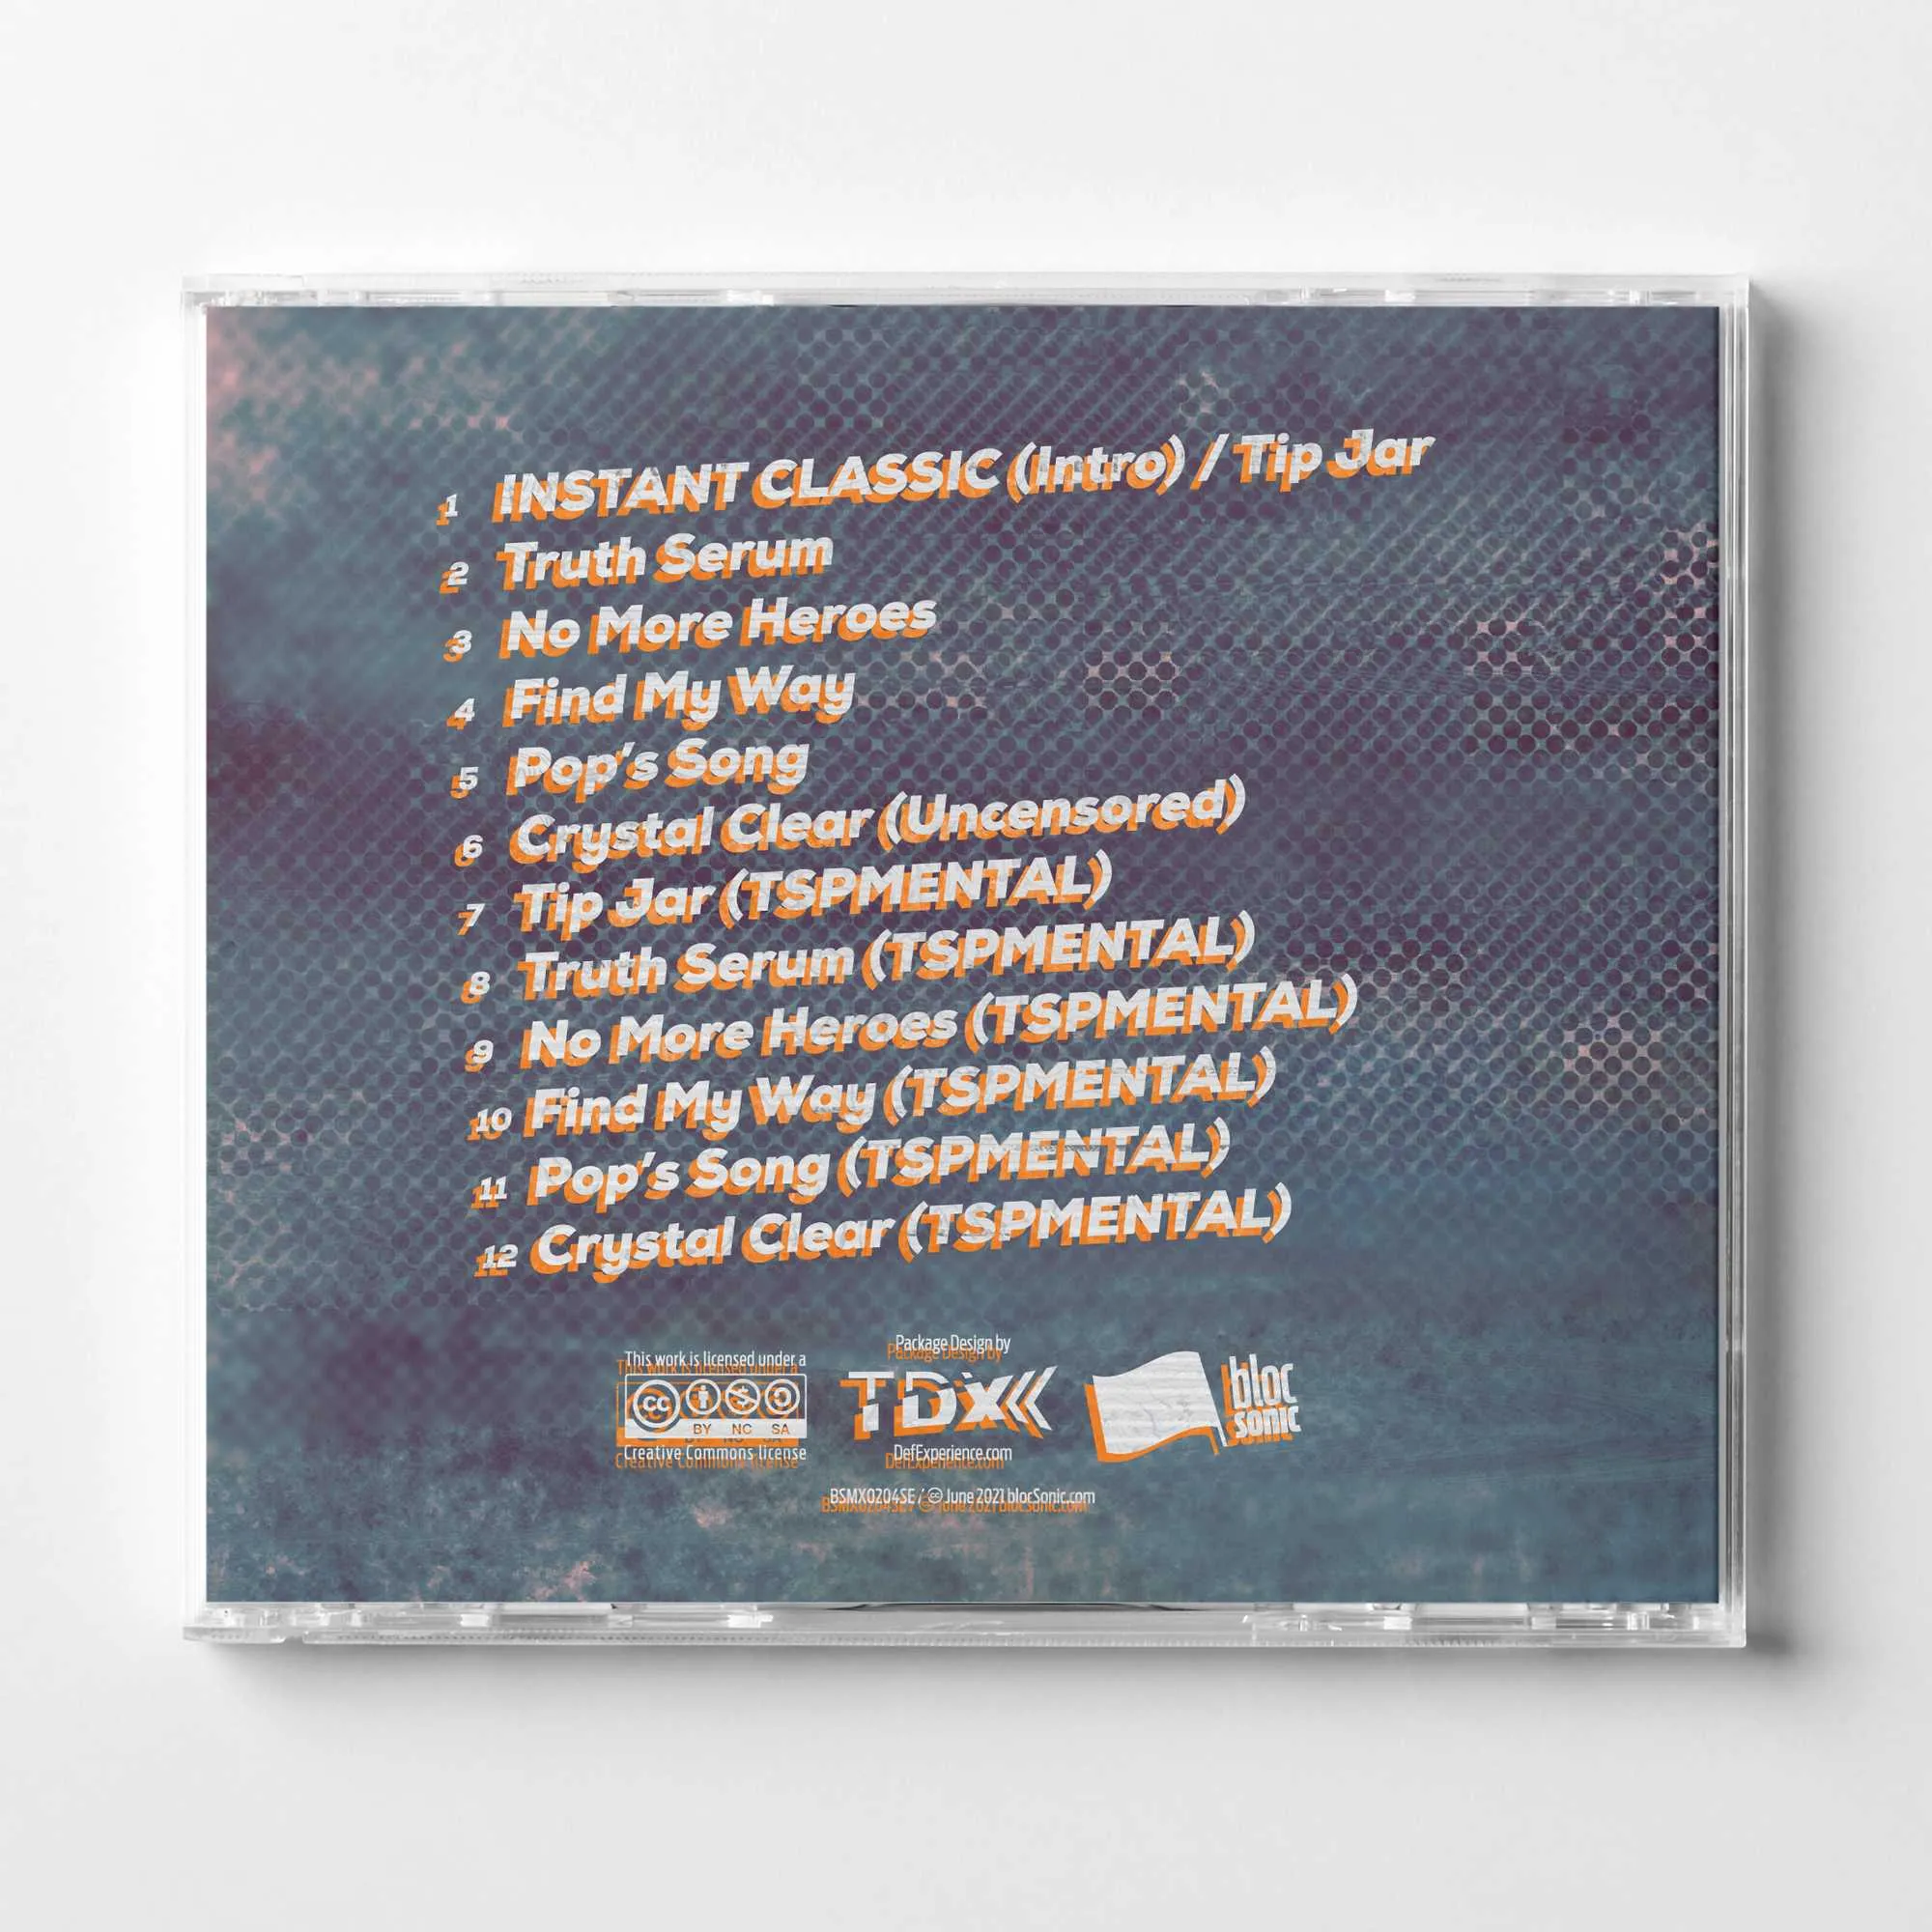 Album promo for “bloc Sonics 2” by CM &amp; Tha Silent Partner